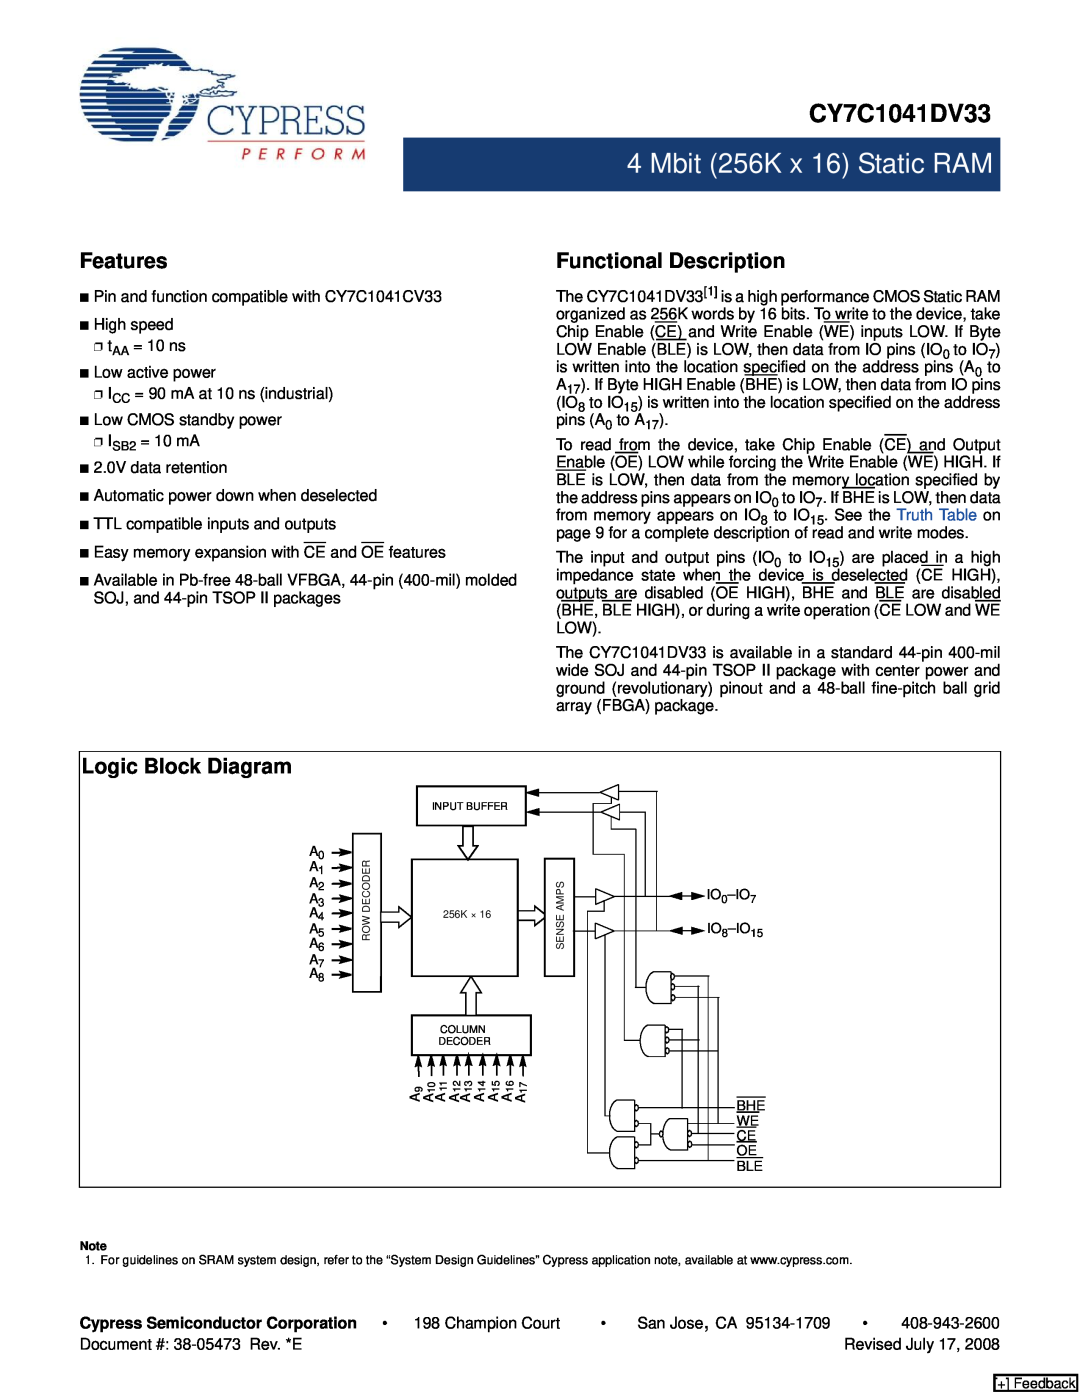 Cypress CY7C1041DV33 manual Features, Functional Description, Logic Block Diagram, Mbit 256K x 16 Static RAM 